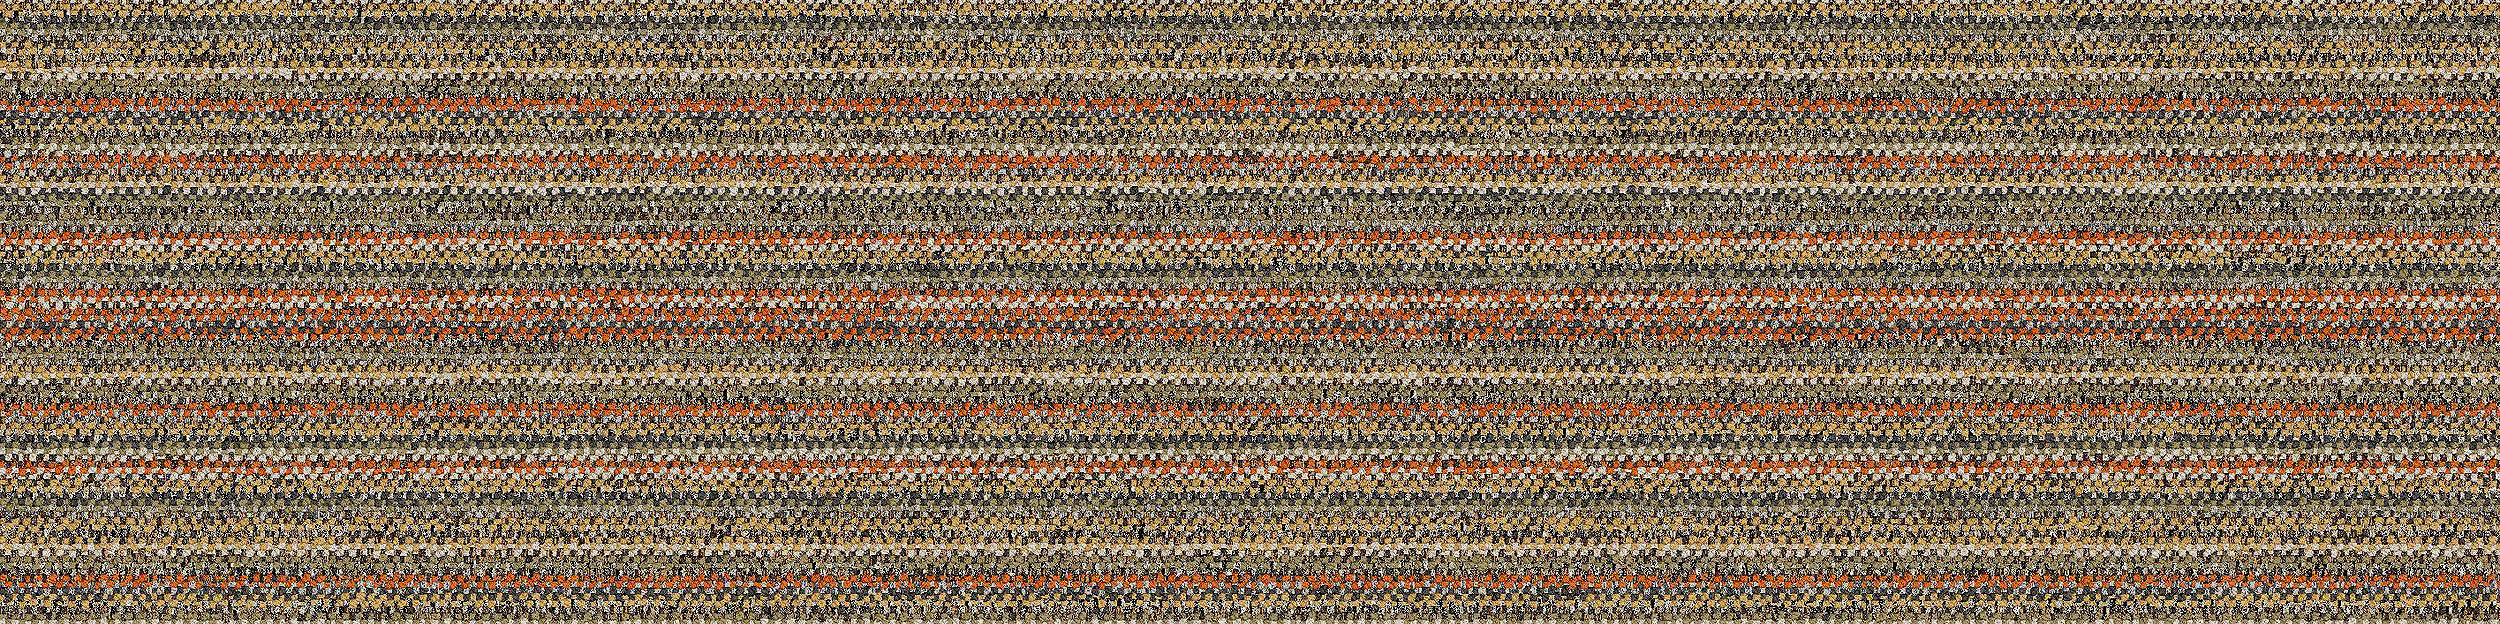 WW865 Carpet Tile In Autumn Warp imagen número 9